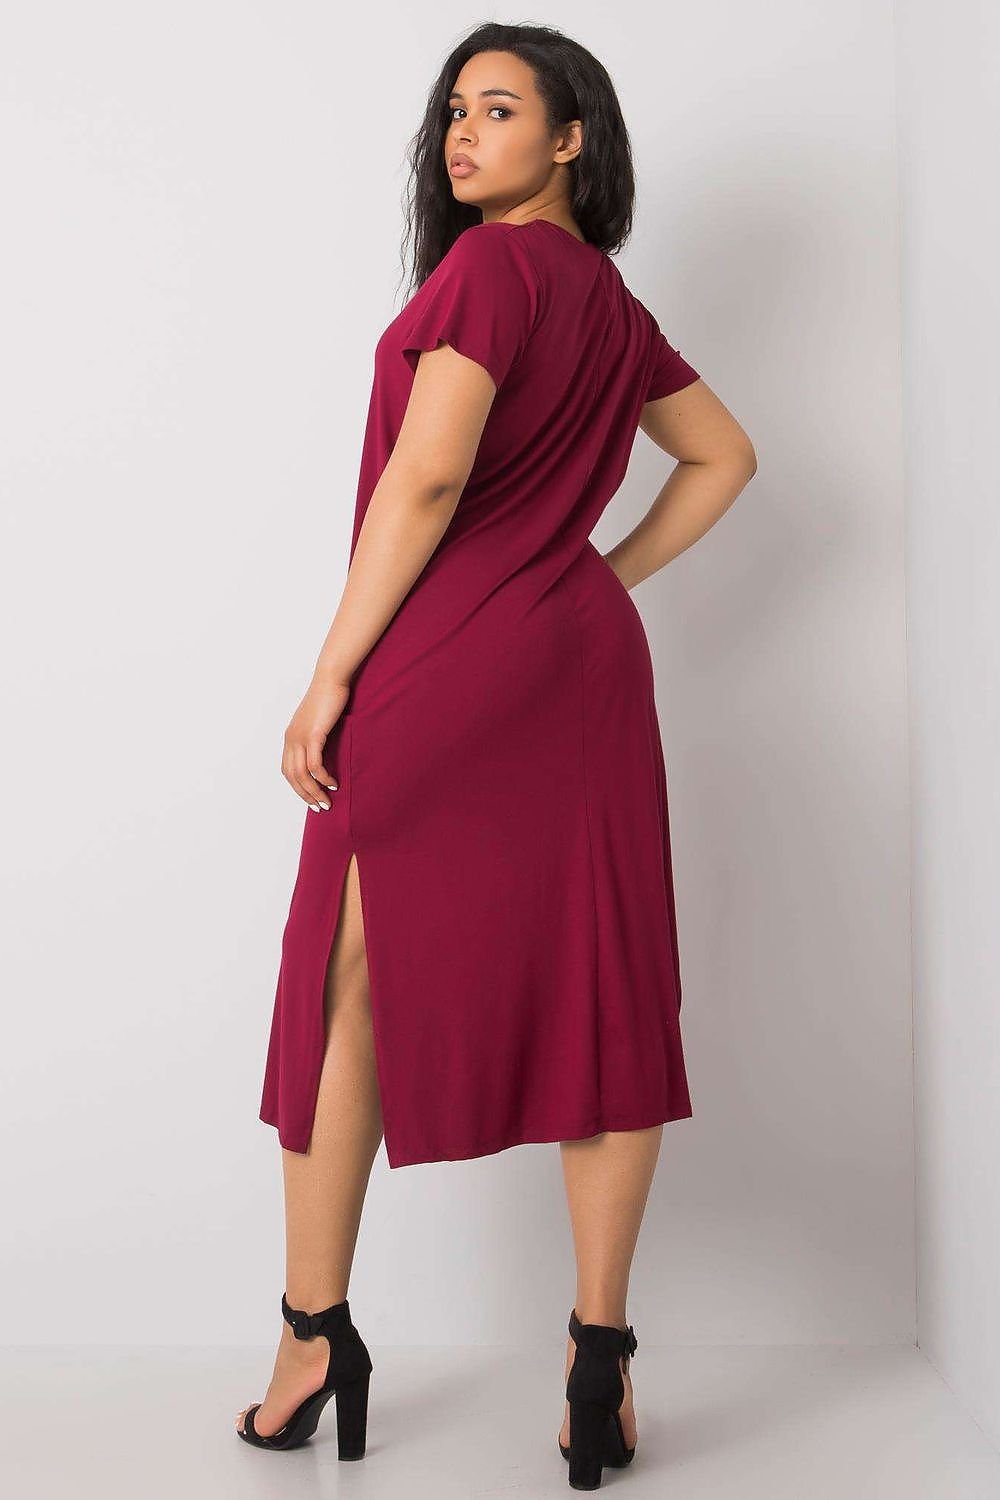 BFG Plus Size Versatile Midi Dress with Short Sleeves